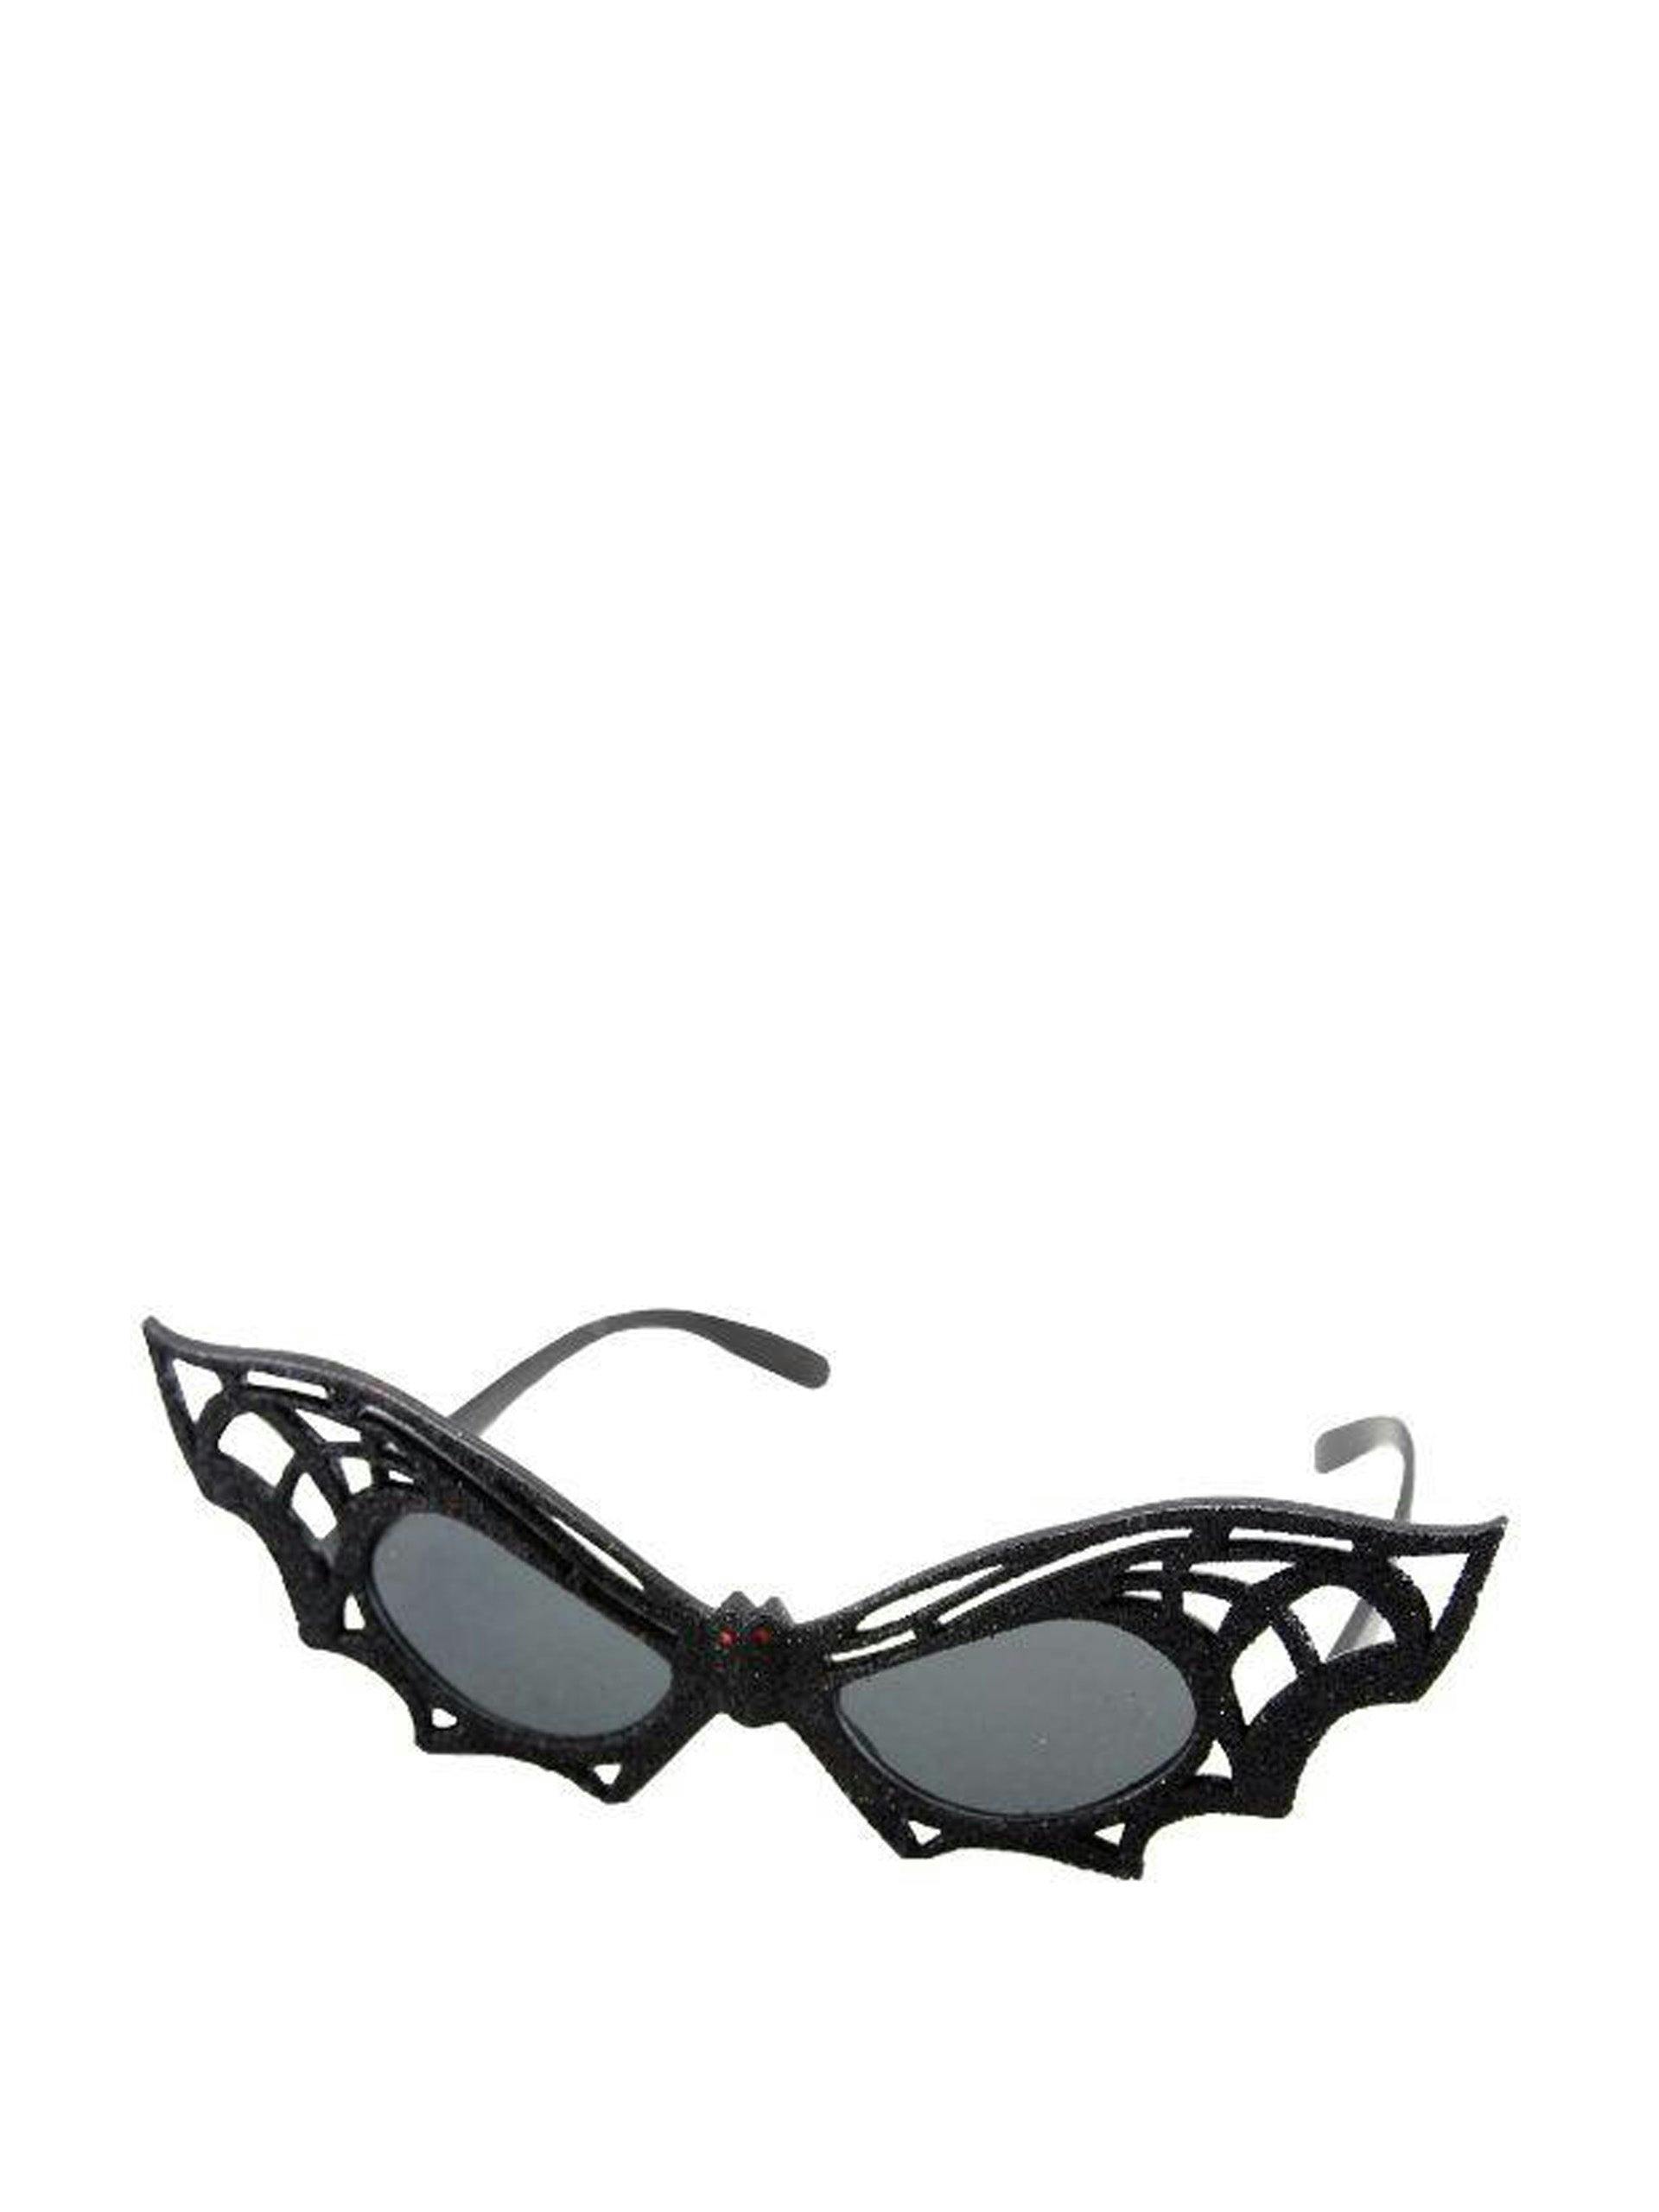 Bat acrylic sunglasses